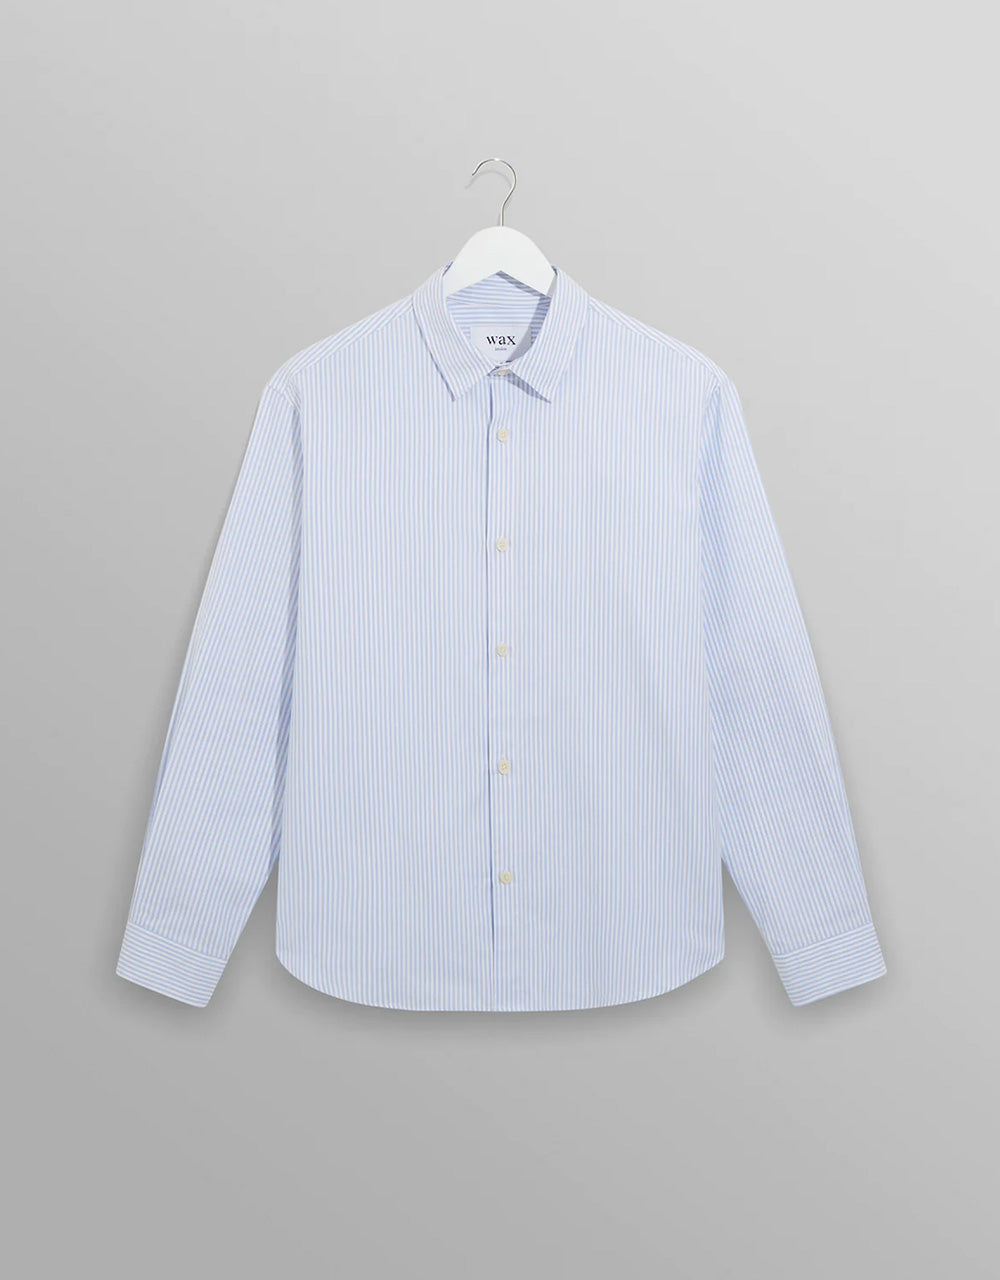 Trin Shirt - Oxford Stripe